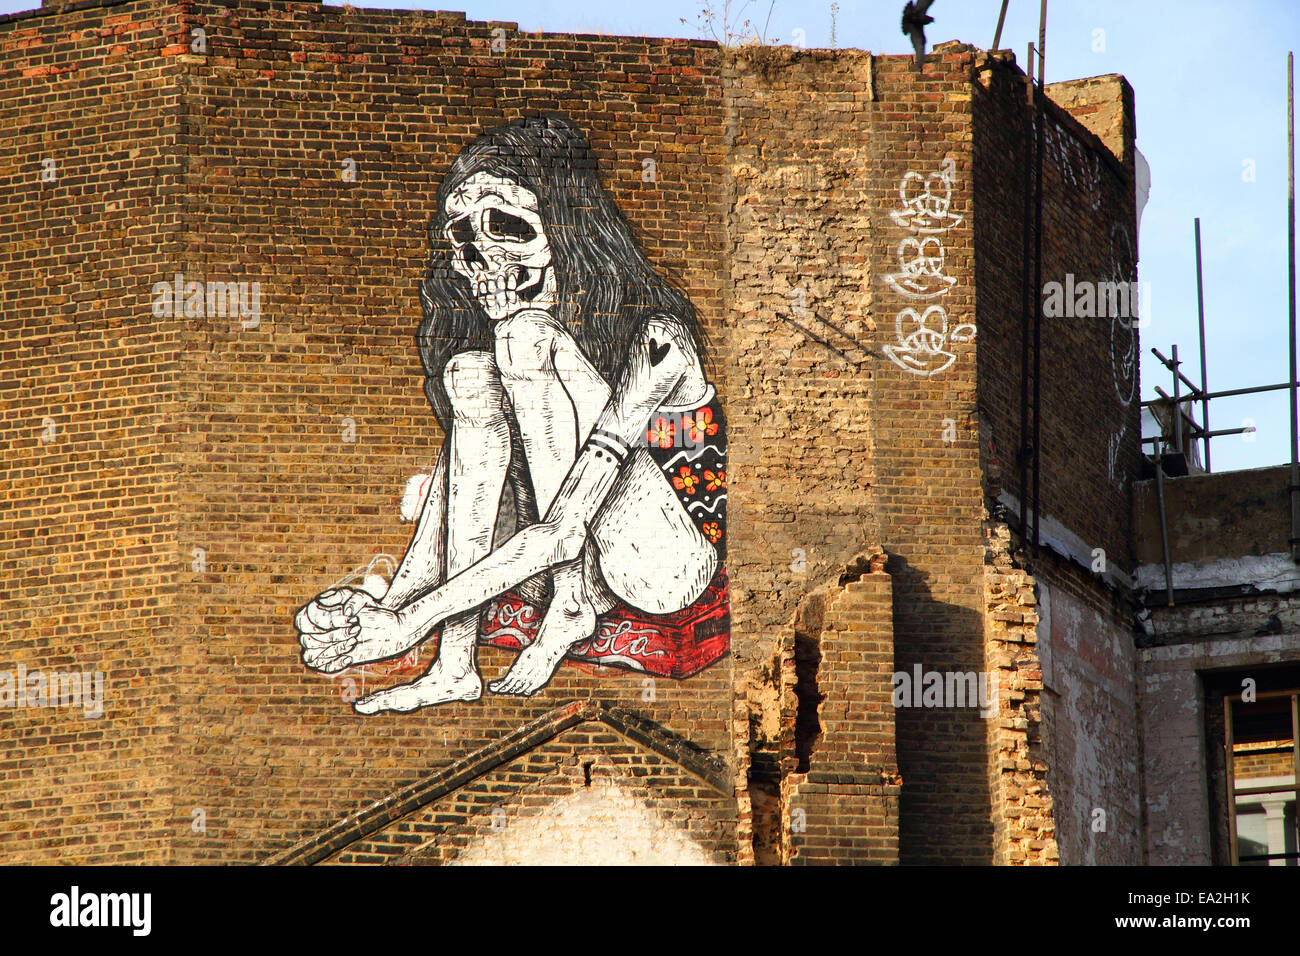 Urban street art in Shoreditch, East London, England Stock Photo